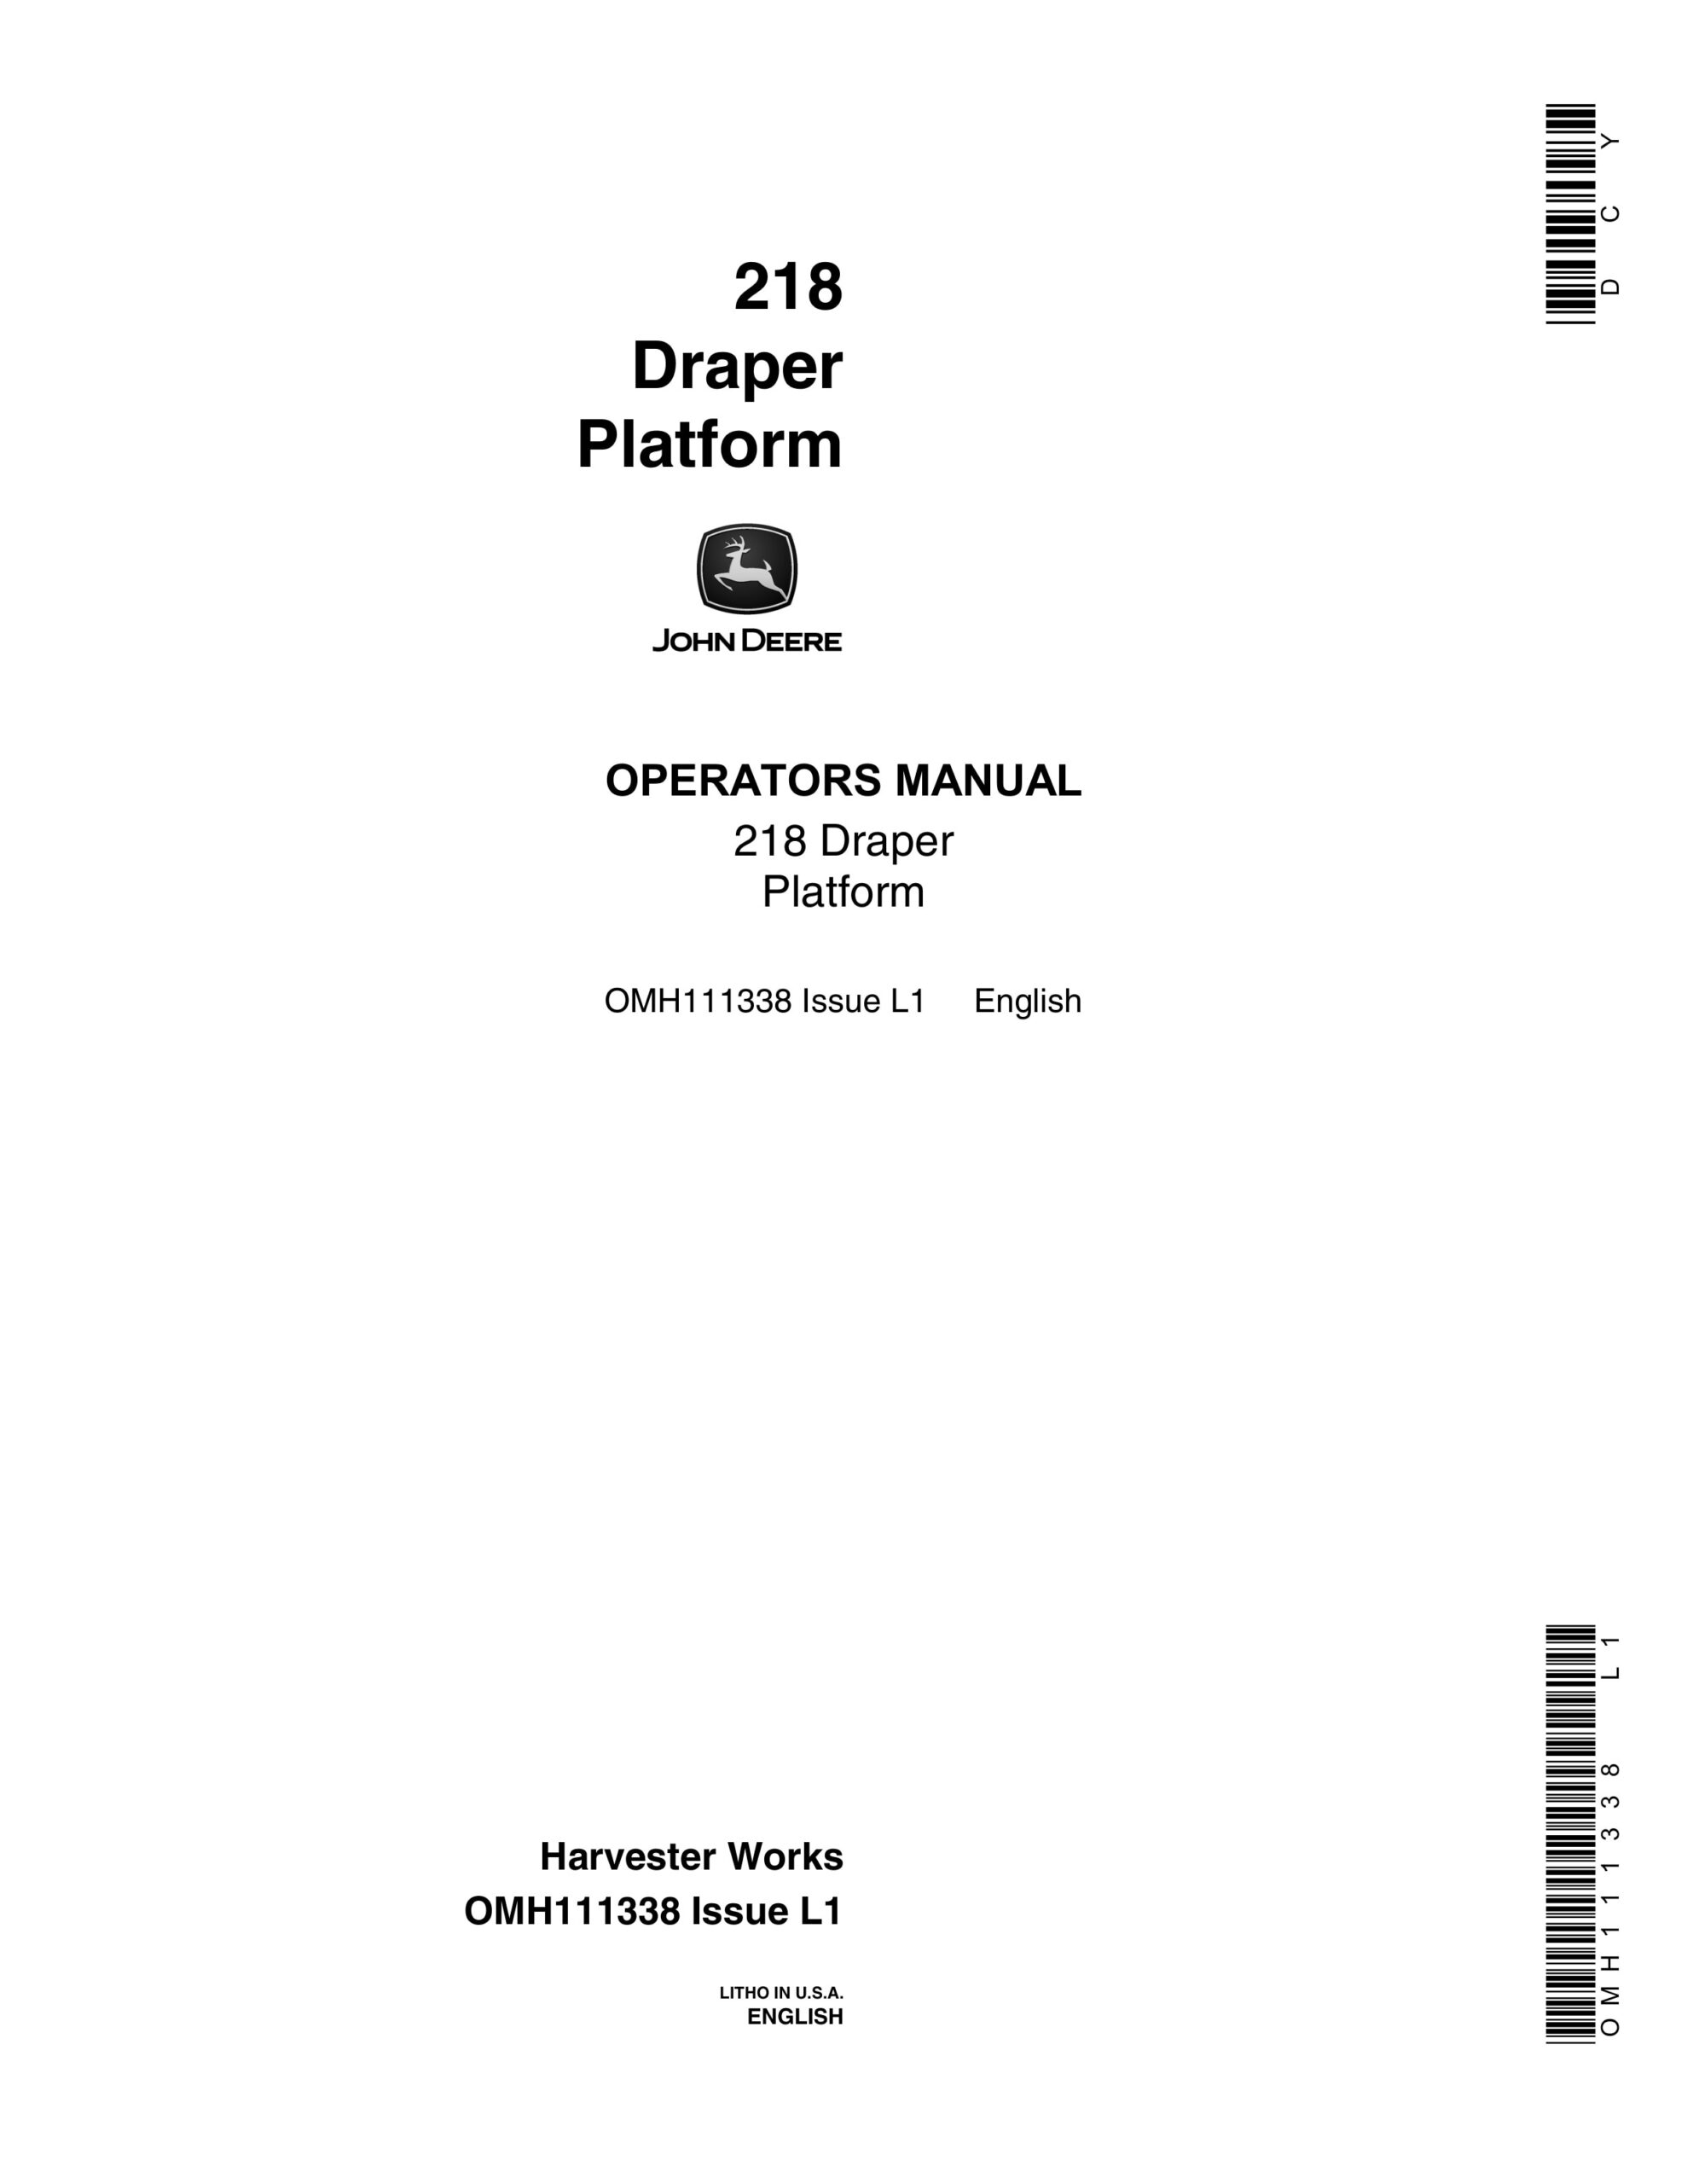 John Deere 218 Draper Platform Operator Manual OMH111338-1